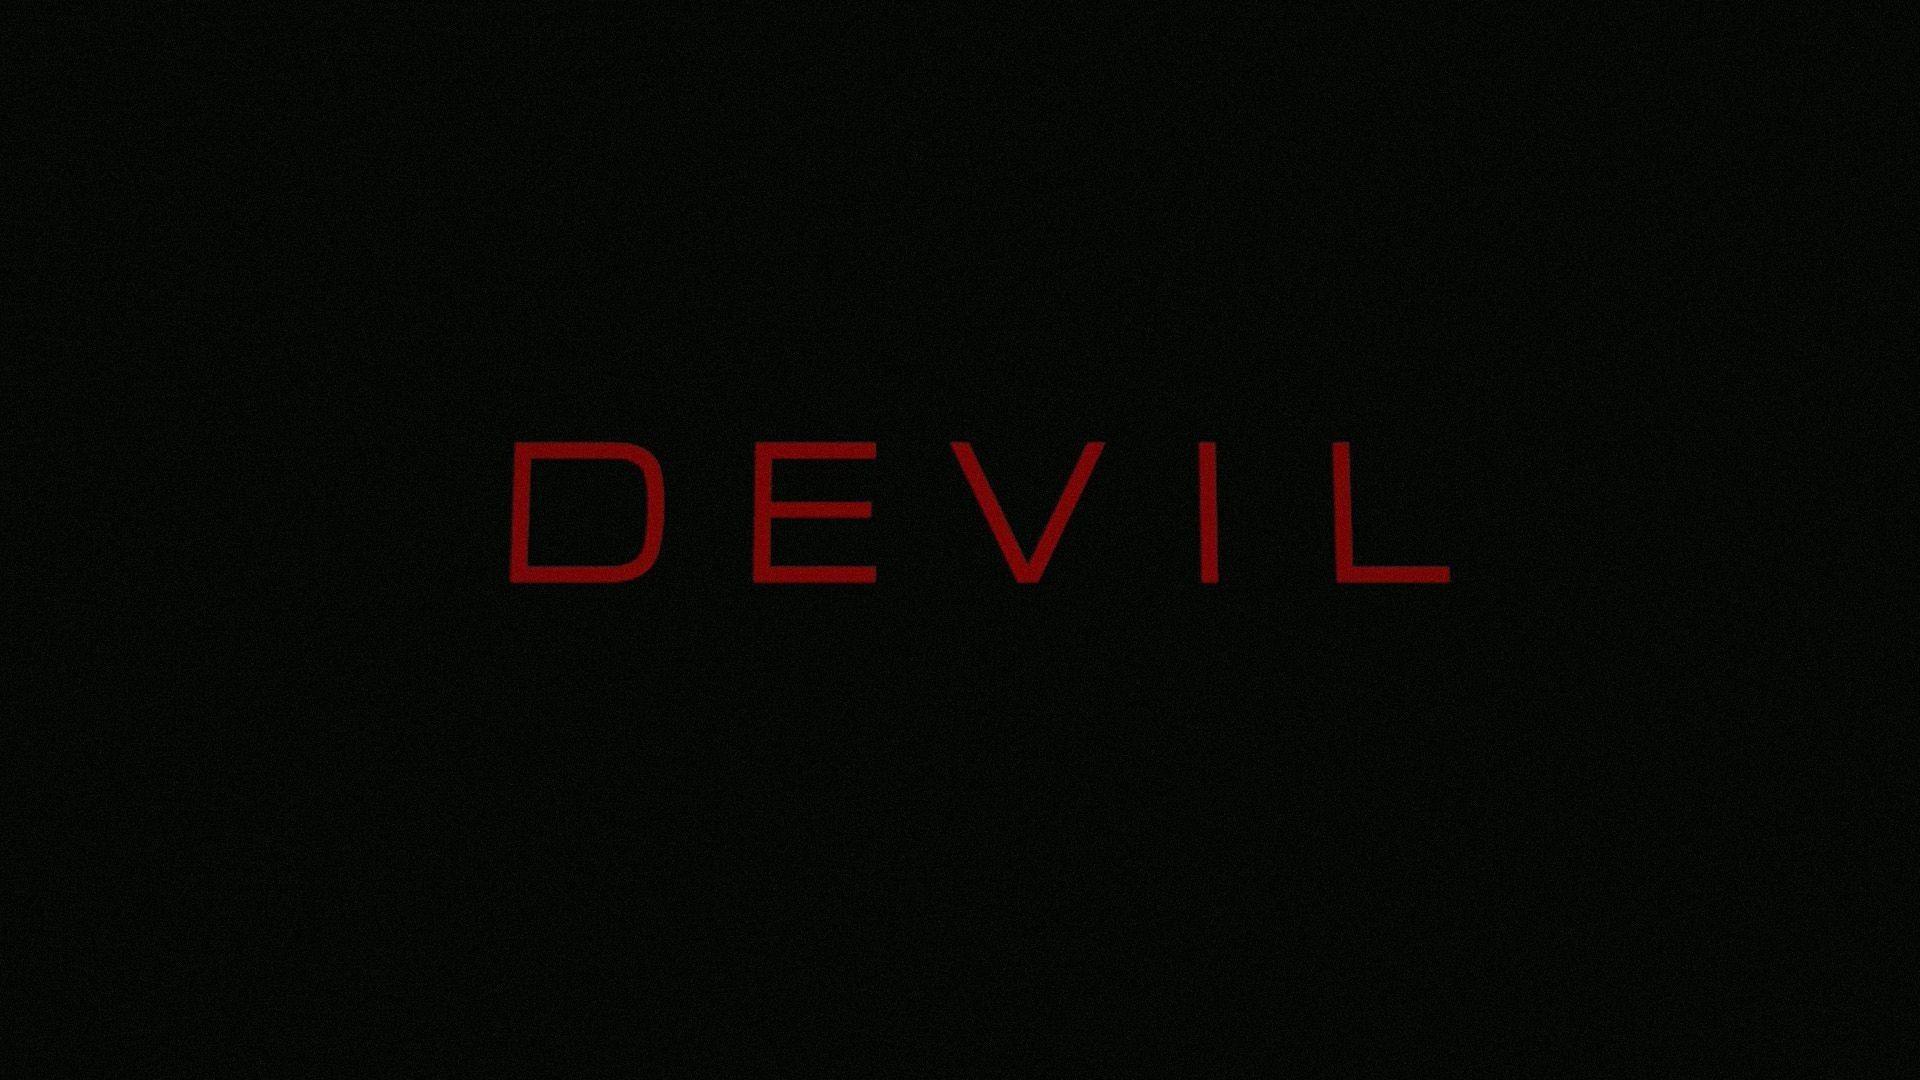 Devil Wallpaper background picture